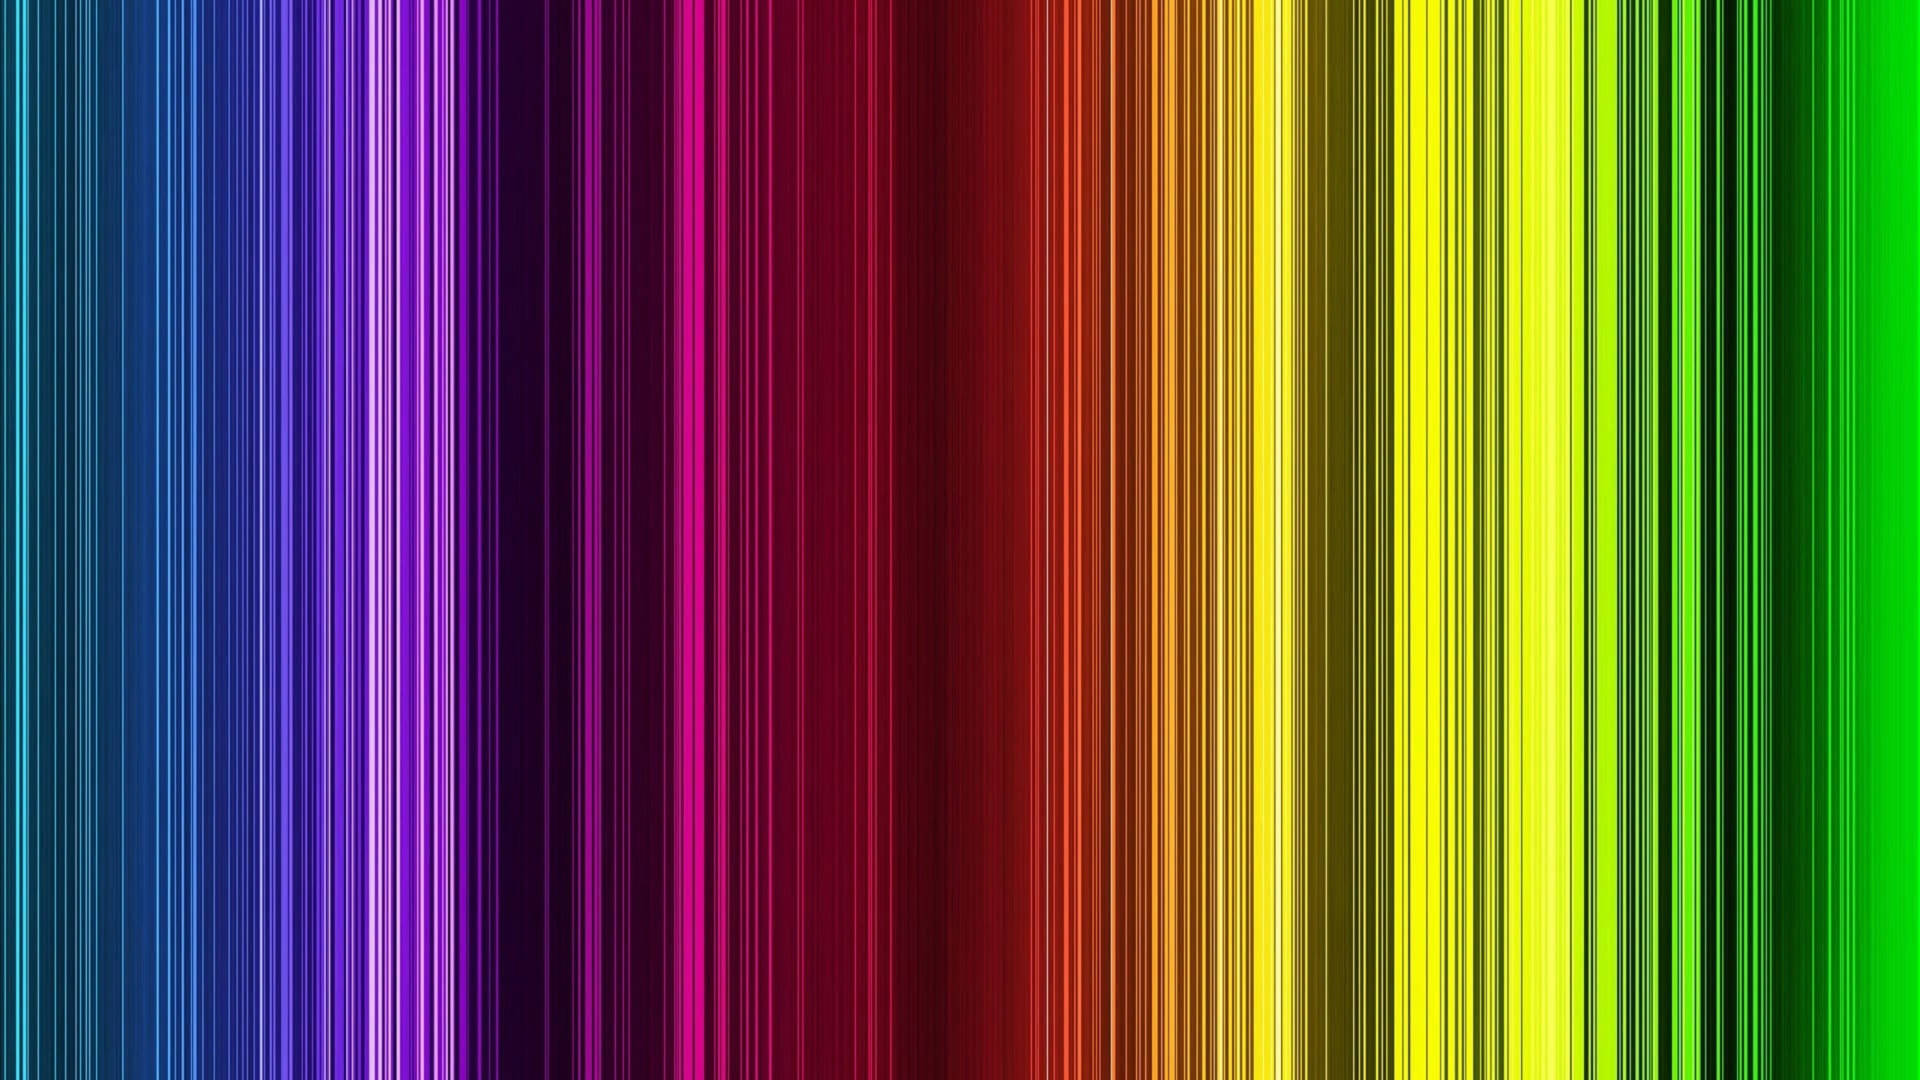 Free Spectrum Wallpaper Downloads, [100+] Spectrum Wallpapers for FREE |  